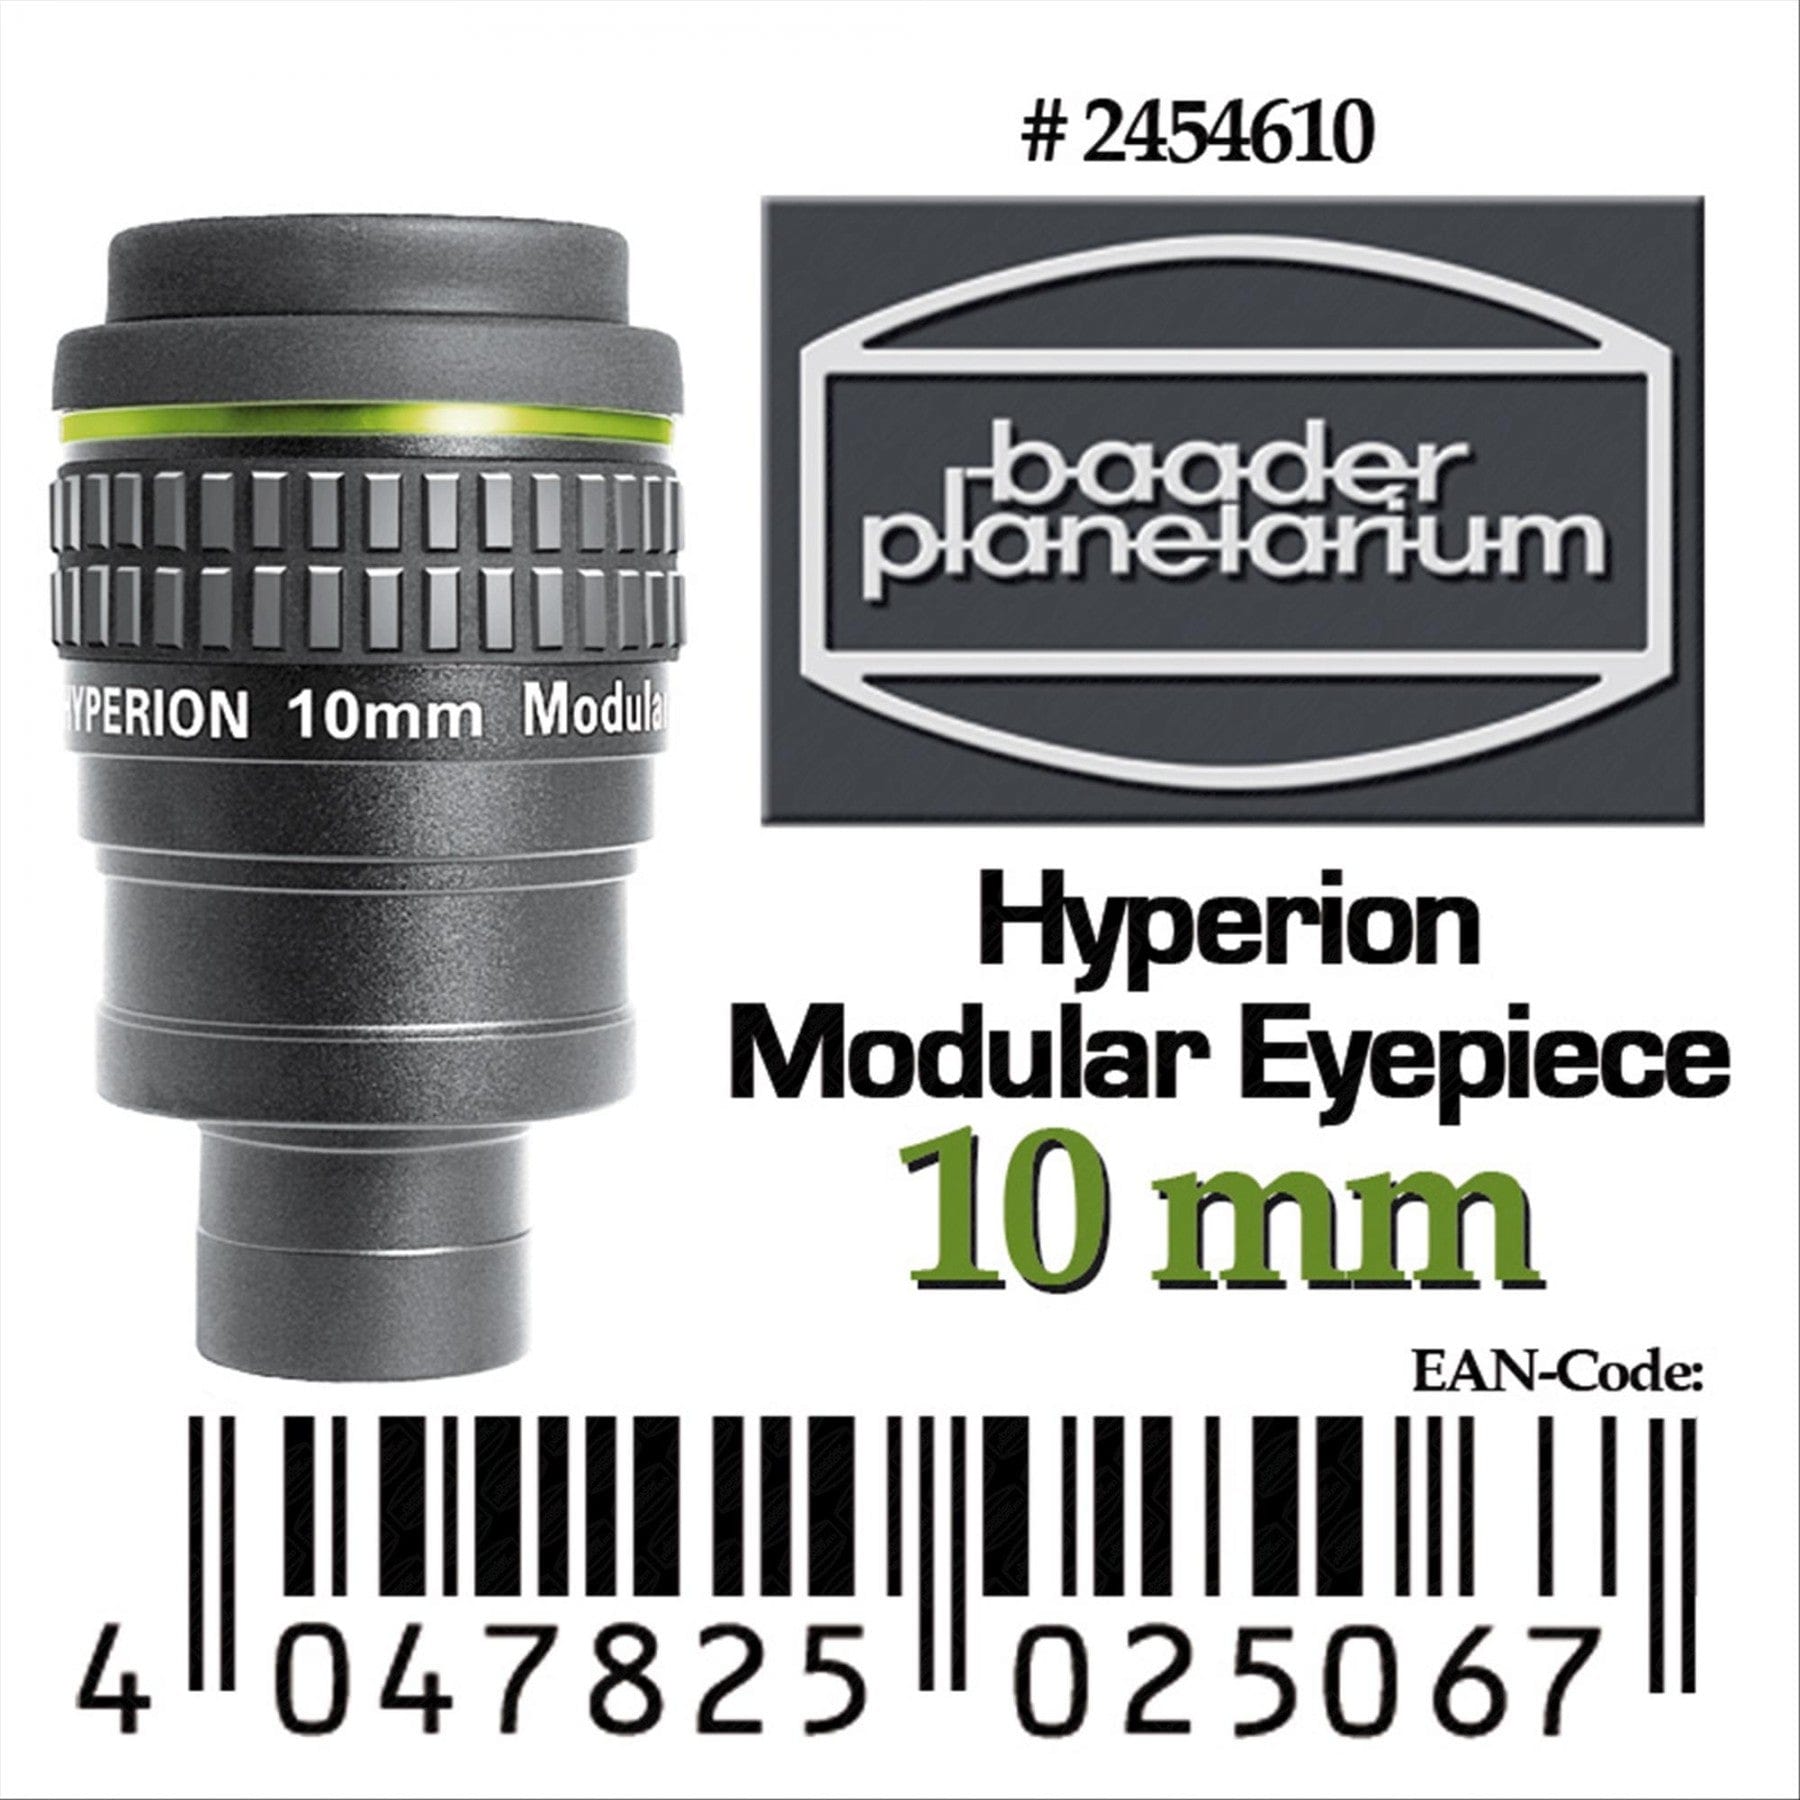 Baader Planetarium Eyepiece Baader Hyperion 10mm 68 Degree Modular Eyepiece - 2454610